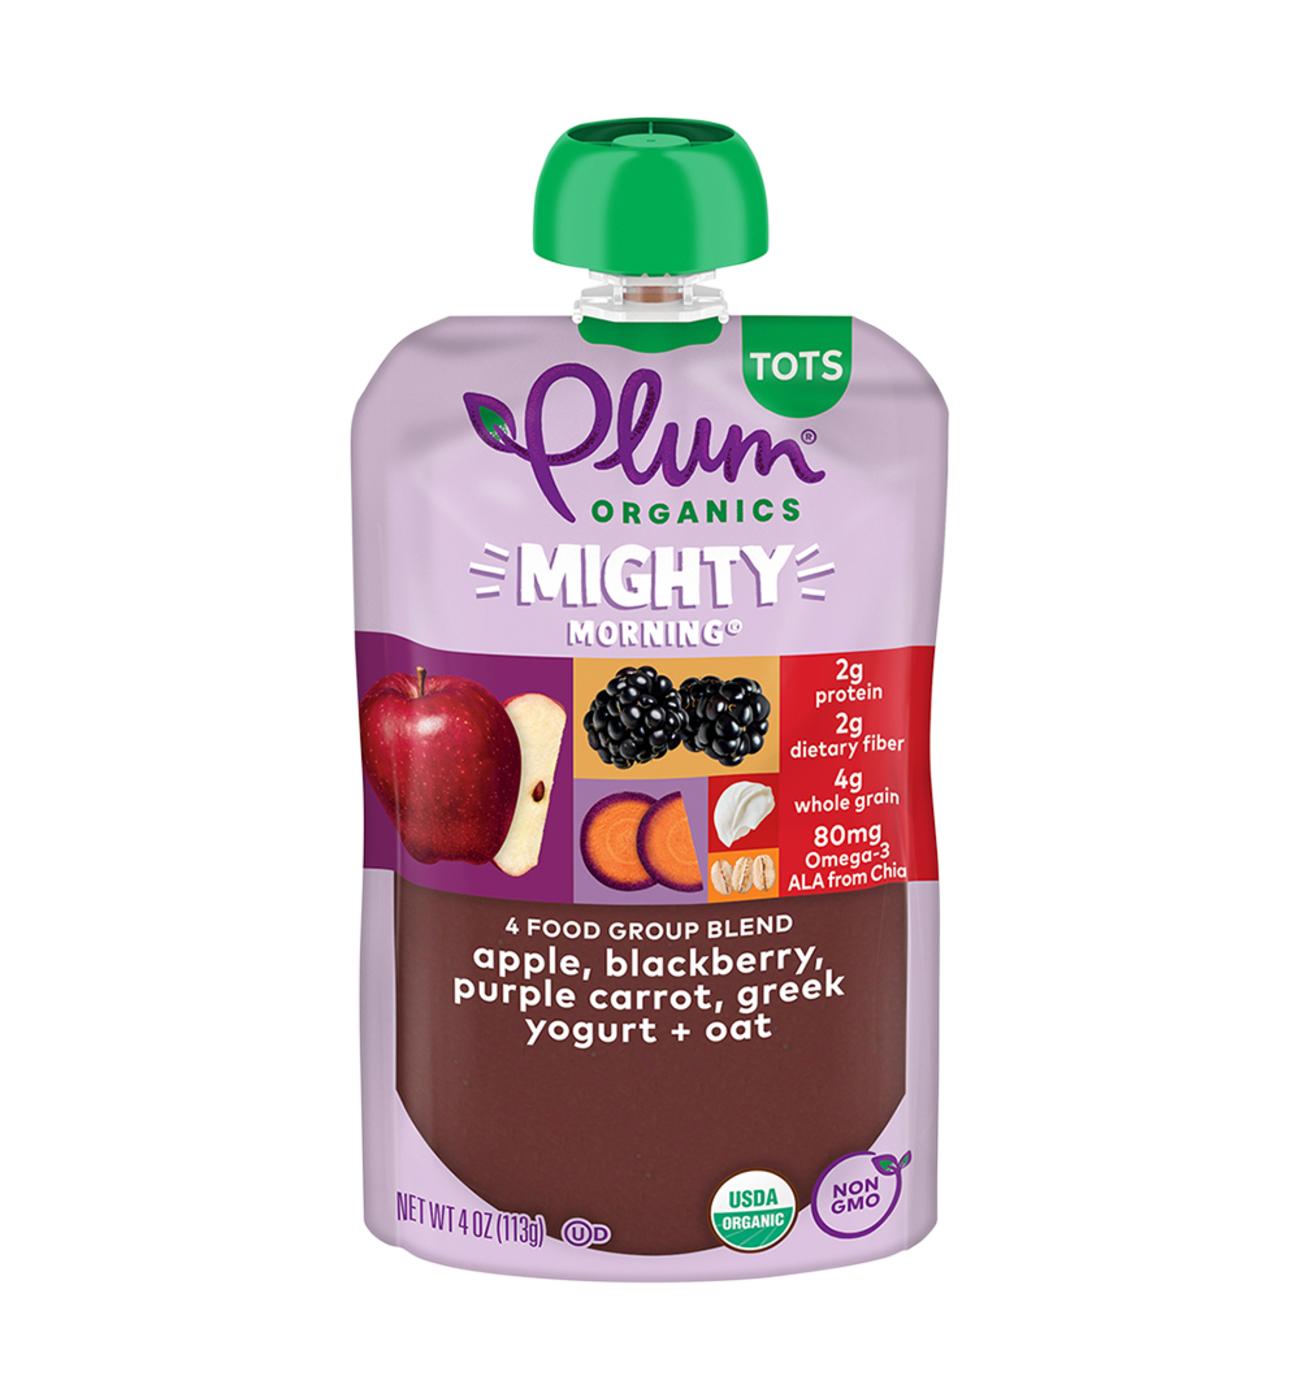 Plum Organics Mighty Morning Pouch - Apple, Blackberry, Purple Carrot, Greek Yogurt +Oat; image 1 of 3